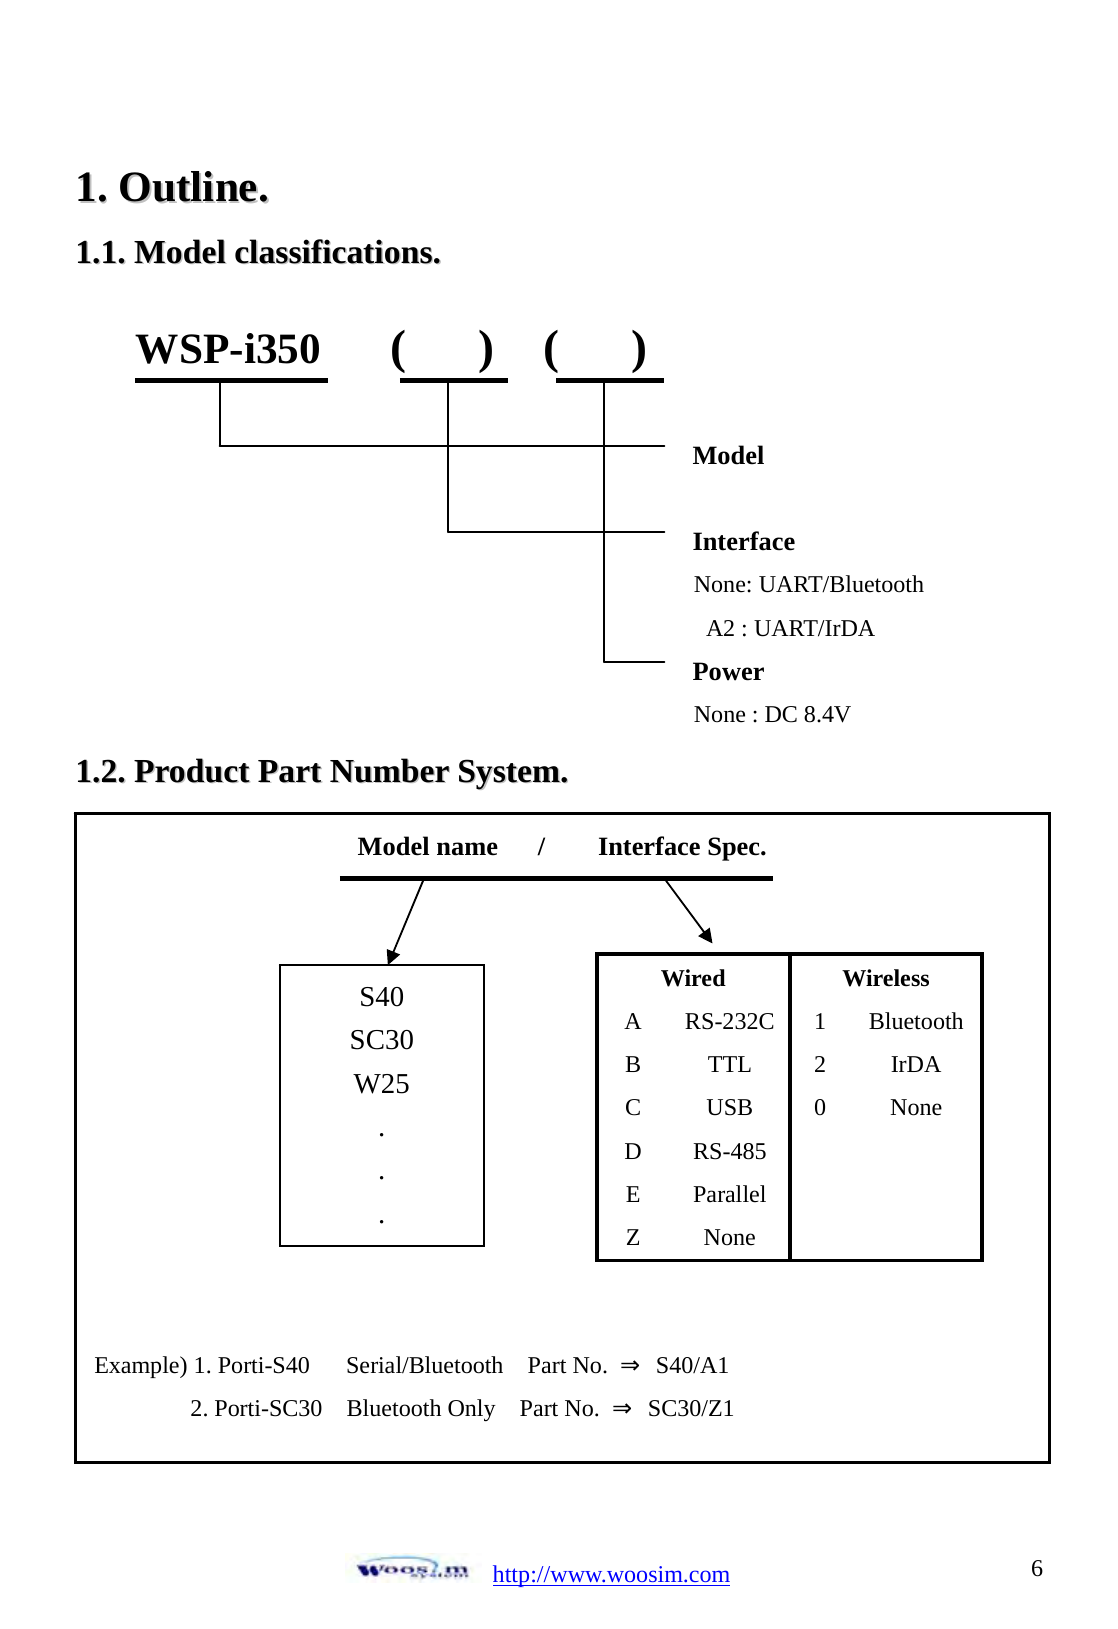  http://www.woosim.com 611..  OOuuttlliinnee..  11..11..  MMooddeell  ccllaassssiiffiiccaattiioonnss..             11..22..  PPrroodduucctt  PPaarrtt  NNuummbbeerr  SSyysstteemm..                     WSP-i350    (   )  (   )  Model  Interface None: UART/Bluetooth      A2 : UART/IrDA Power None : DC 8.4V Model name   /    Interface Spec.            Example) 1. Porti-S40      Serial/Bluetooth    Part No.  ⇒ S40/A1         2. Porti-SC30  Bluetooth Only  Part No. ⇒ SC30/Z1 S40 SC30 W25 . . . Wired Wireless A RS-232C 1 BluetoothB TTL 2 IrDA C USB 0 None D RS-485    E Parallel    Z None    